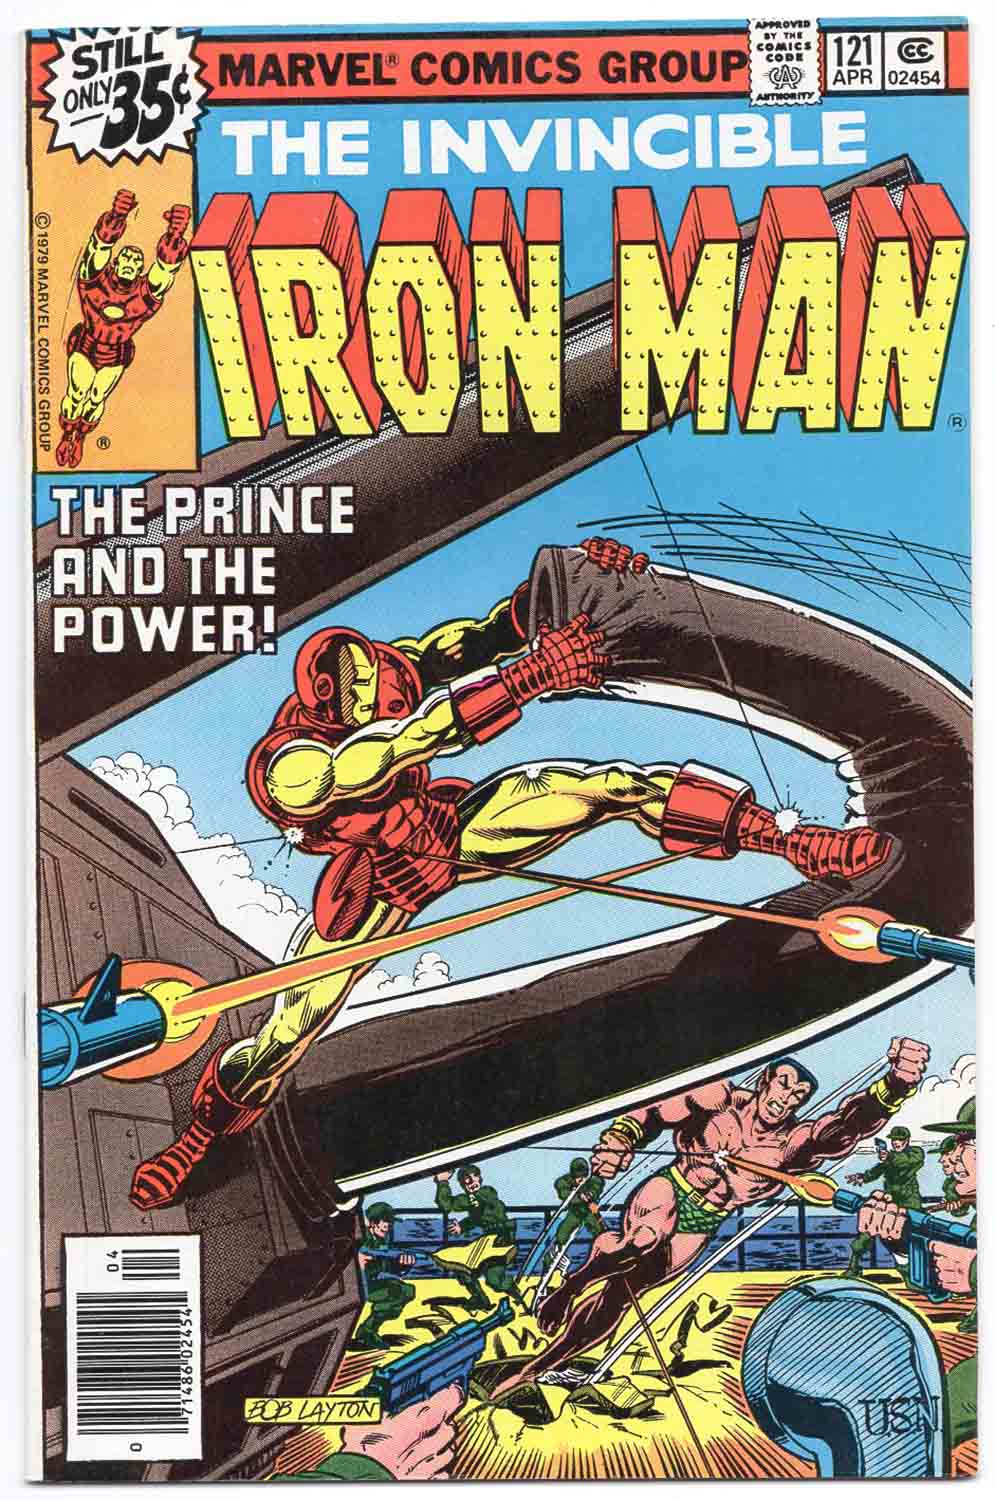 Iron Man #121